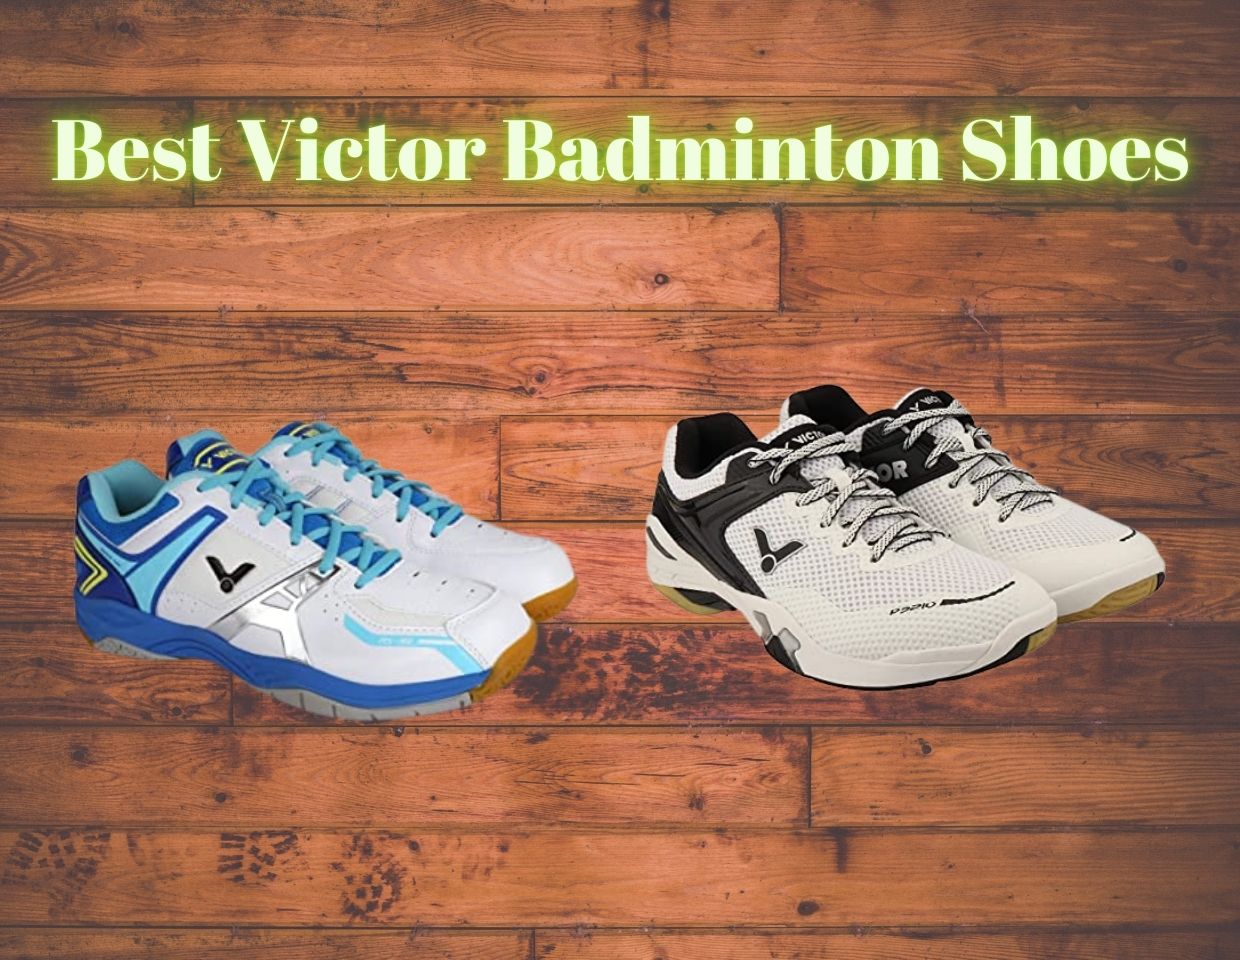 Best-Victor-Badminton-Shoes-Reviews